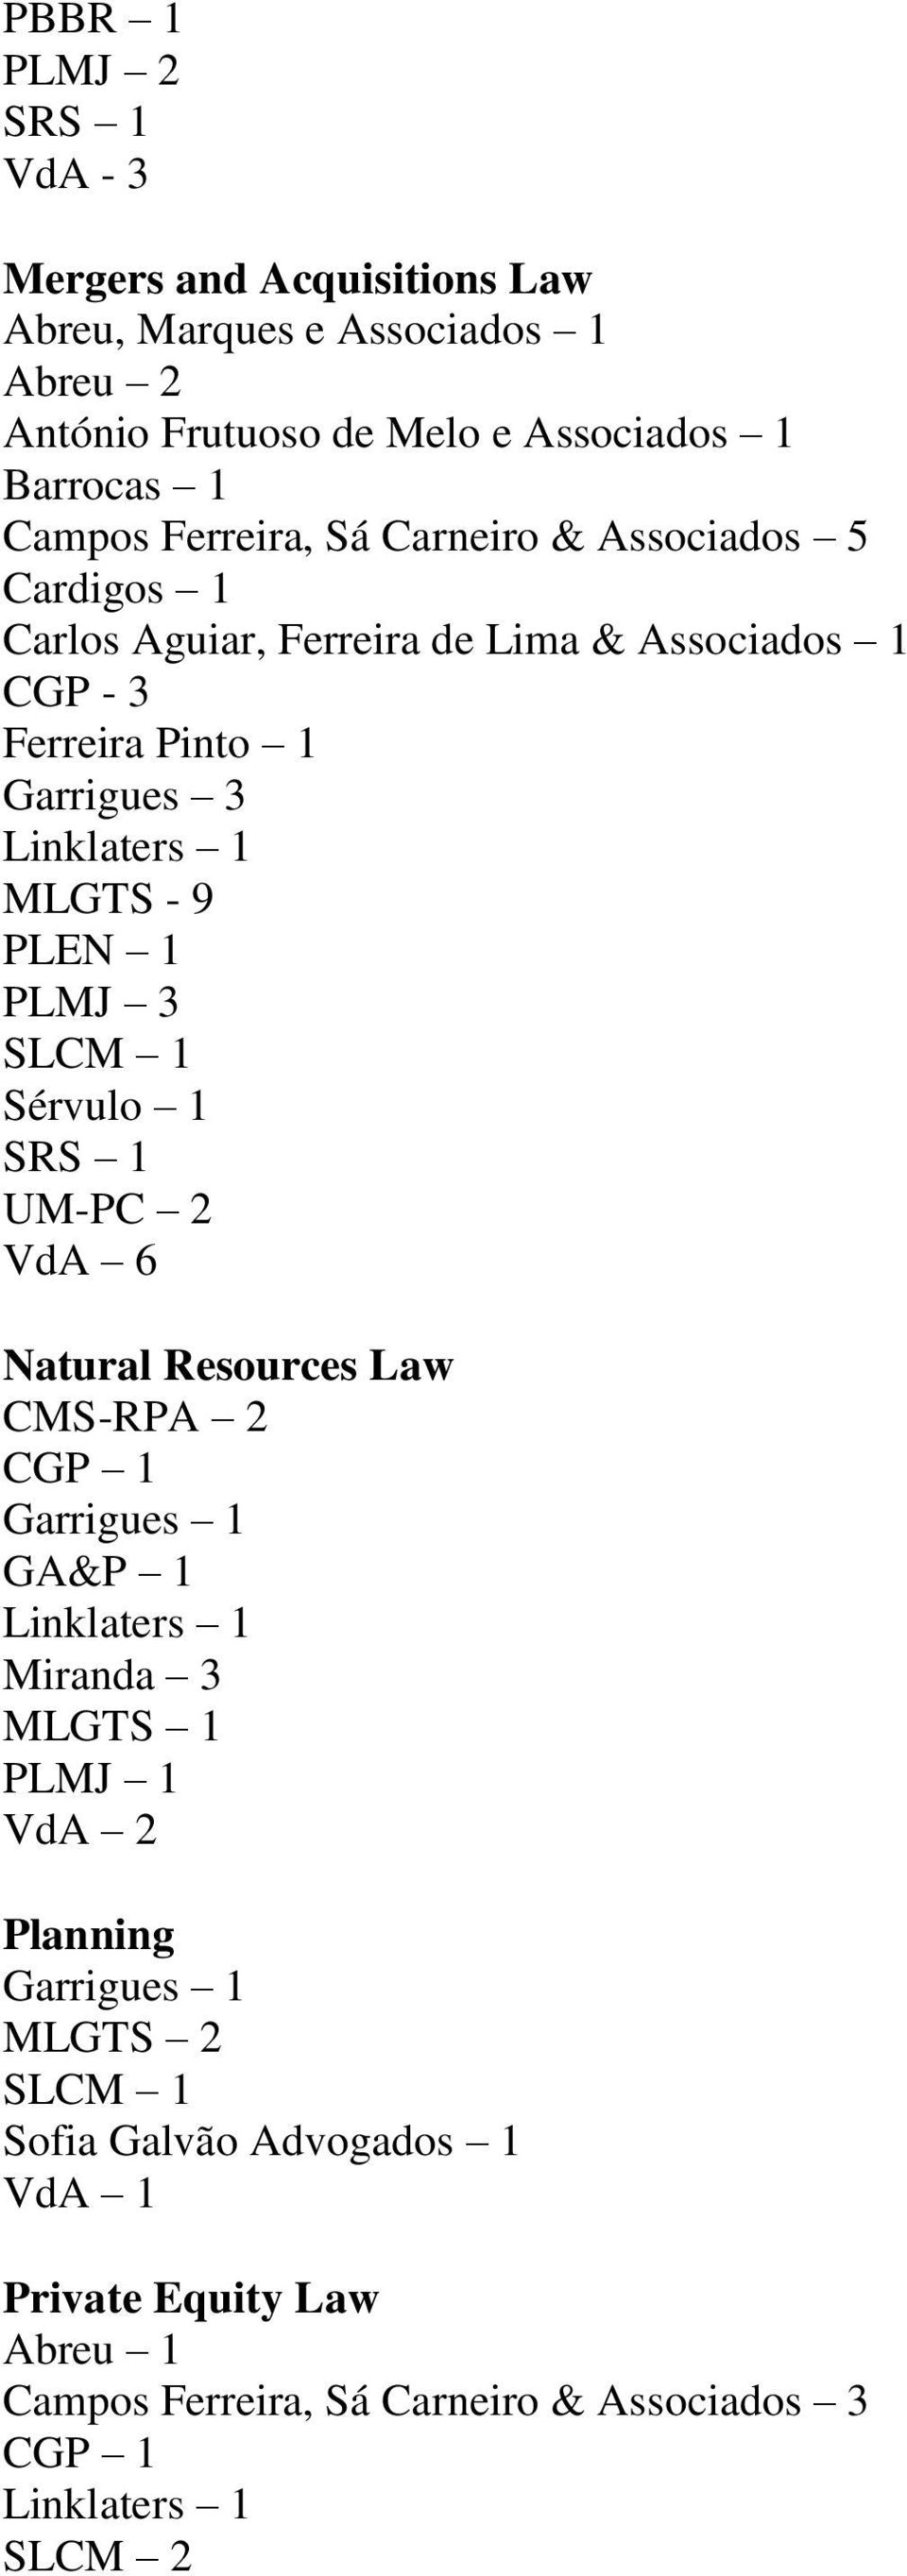 Pinto 1 Garrigues 3 MLGTS - 9 PLEN 1 PLMJ 3 SLCM 1 VdA 6 Natural Resources Law Miranda 3 PLMJ 1 VdA 2